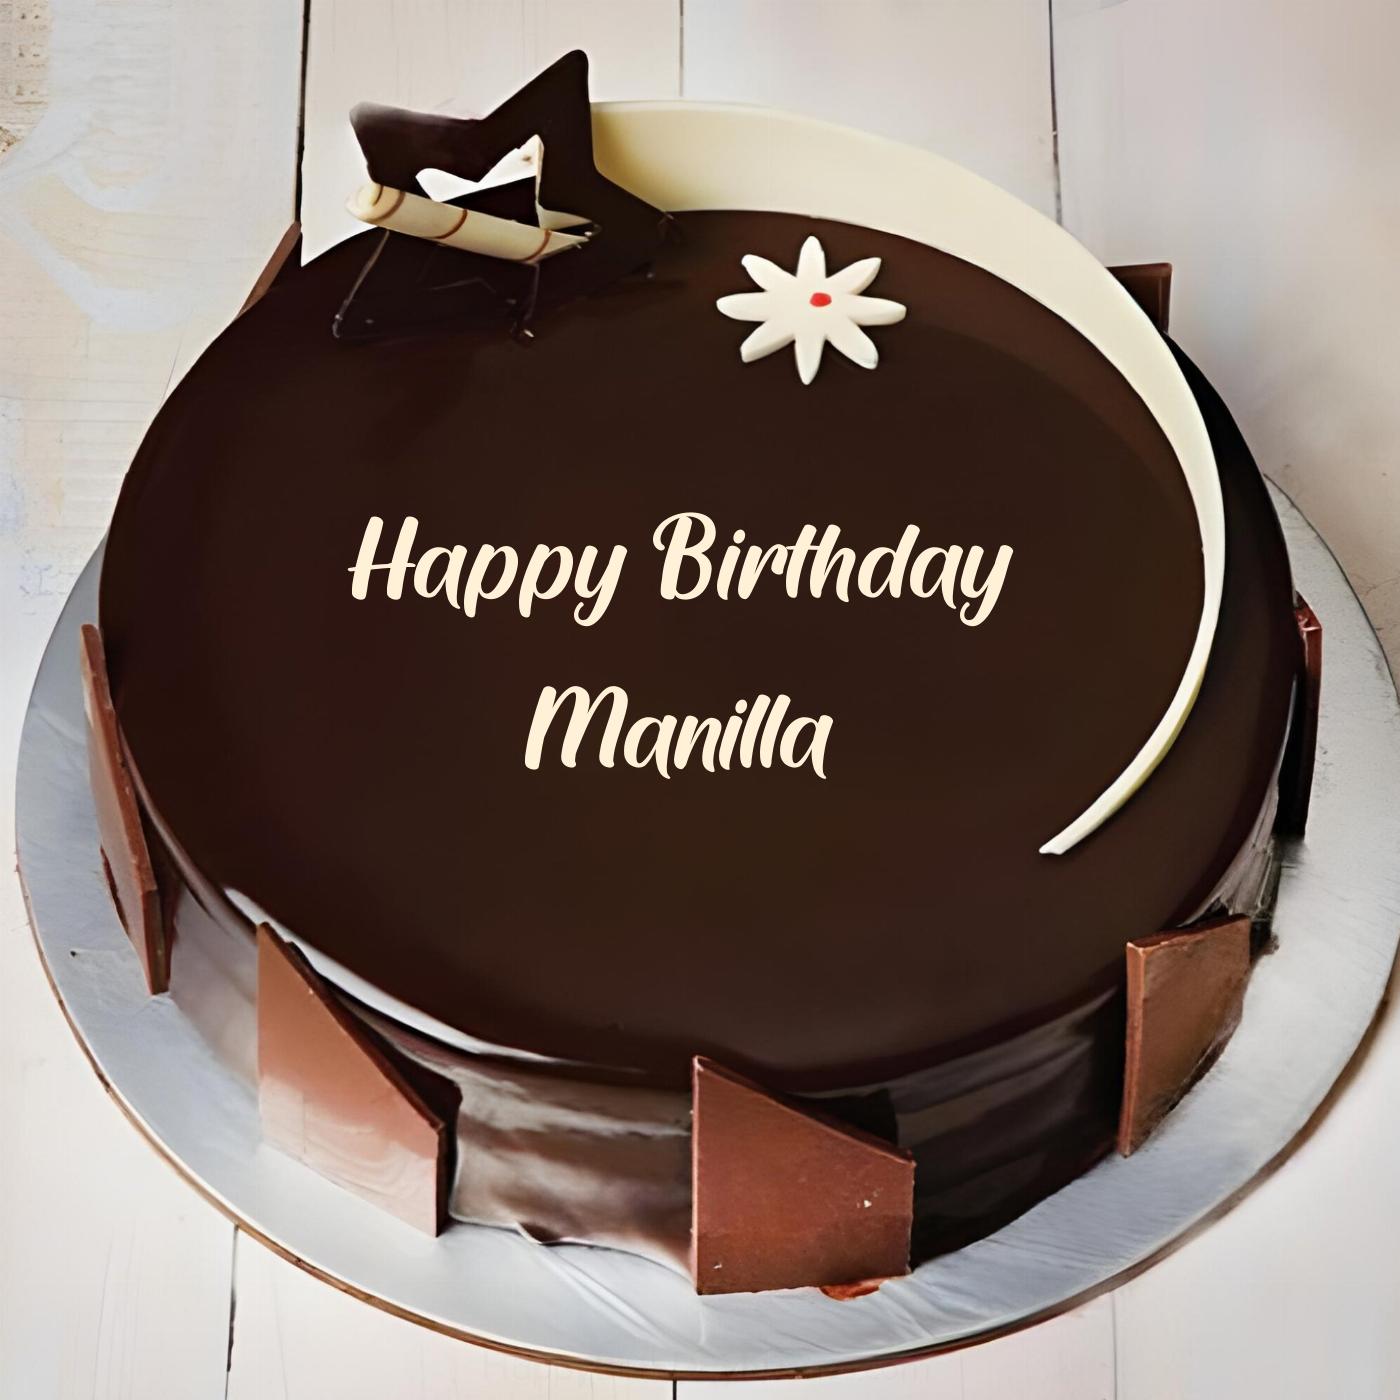 Happy Birthday Manilla Chocolate Star Cake